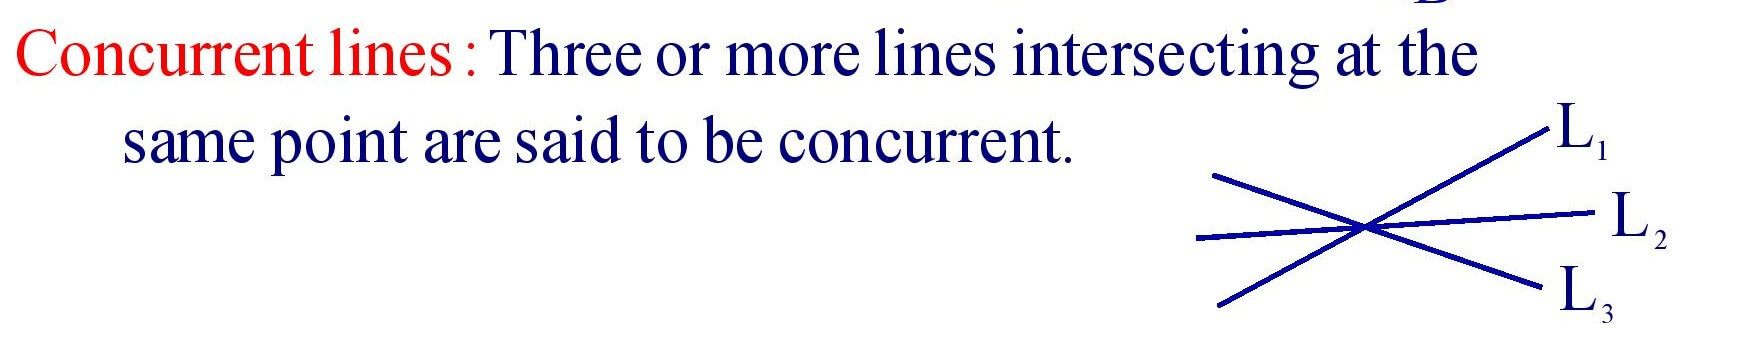 Concurrent lines